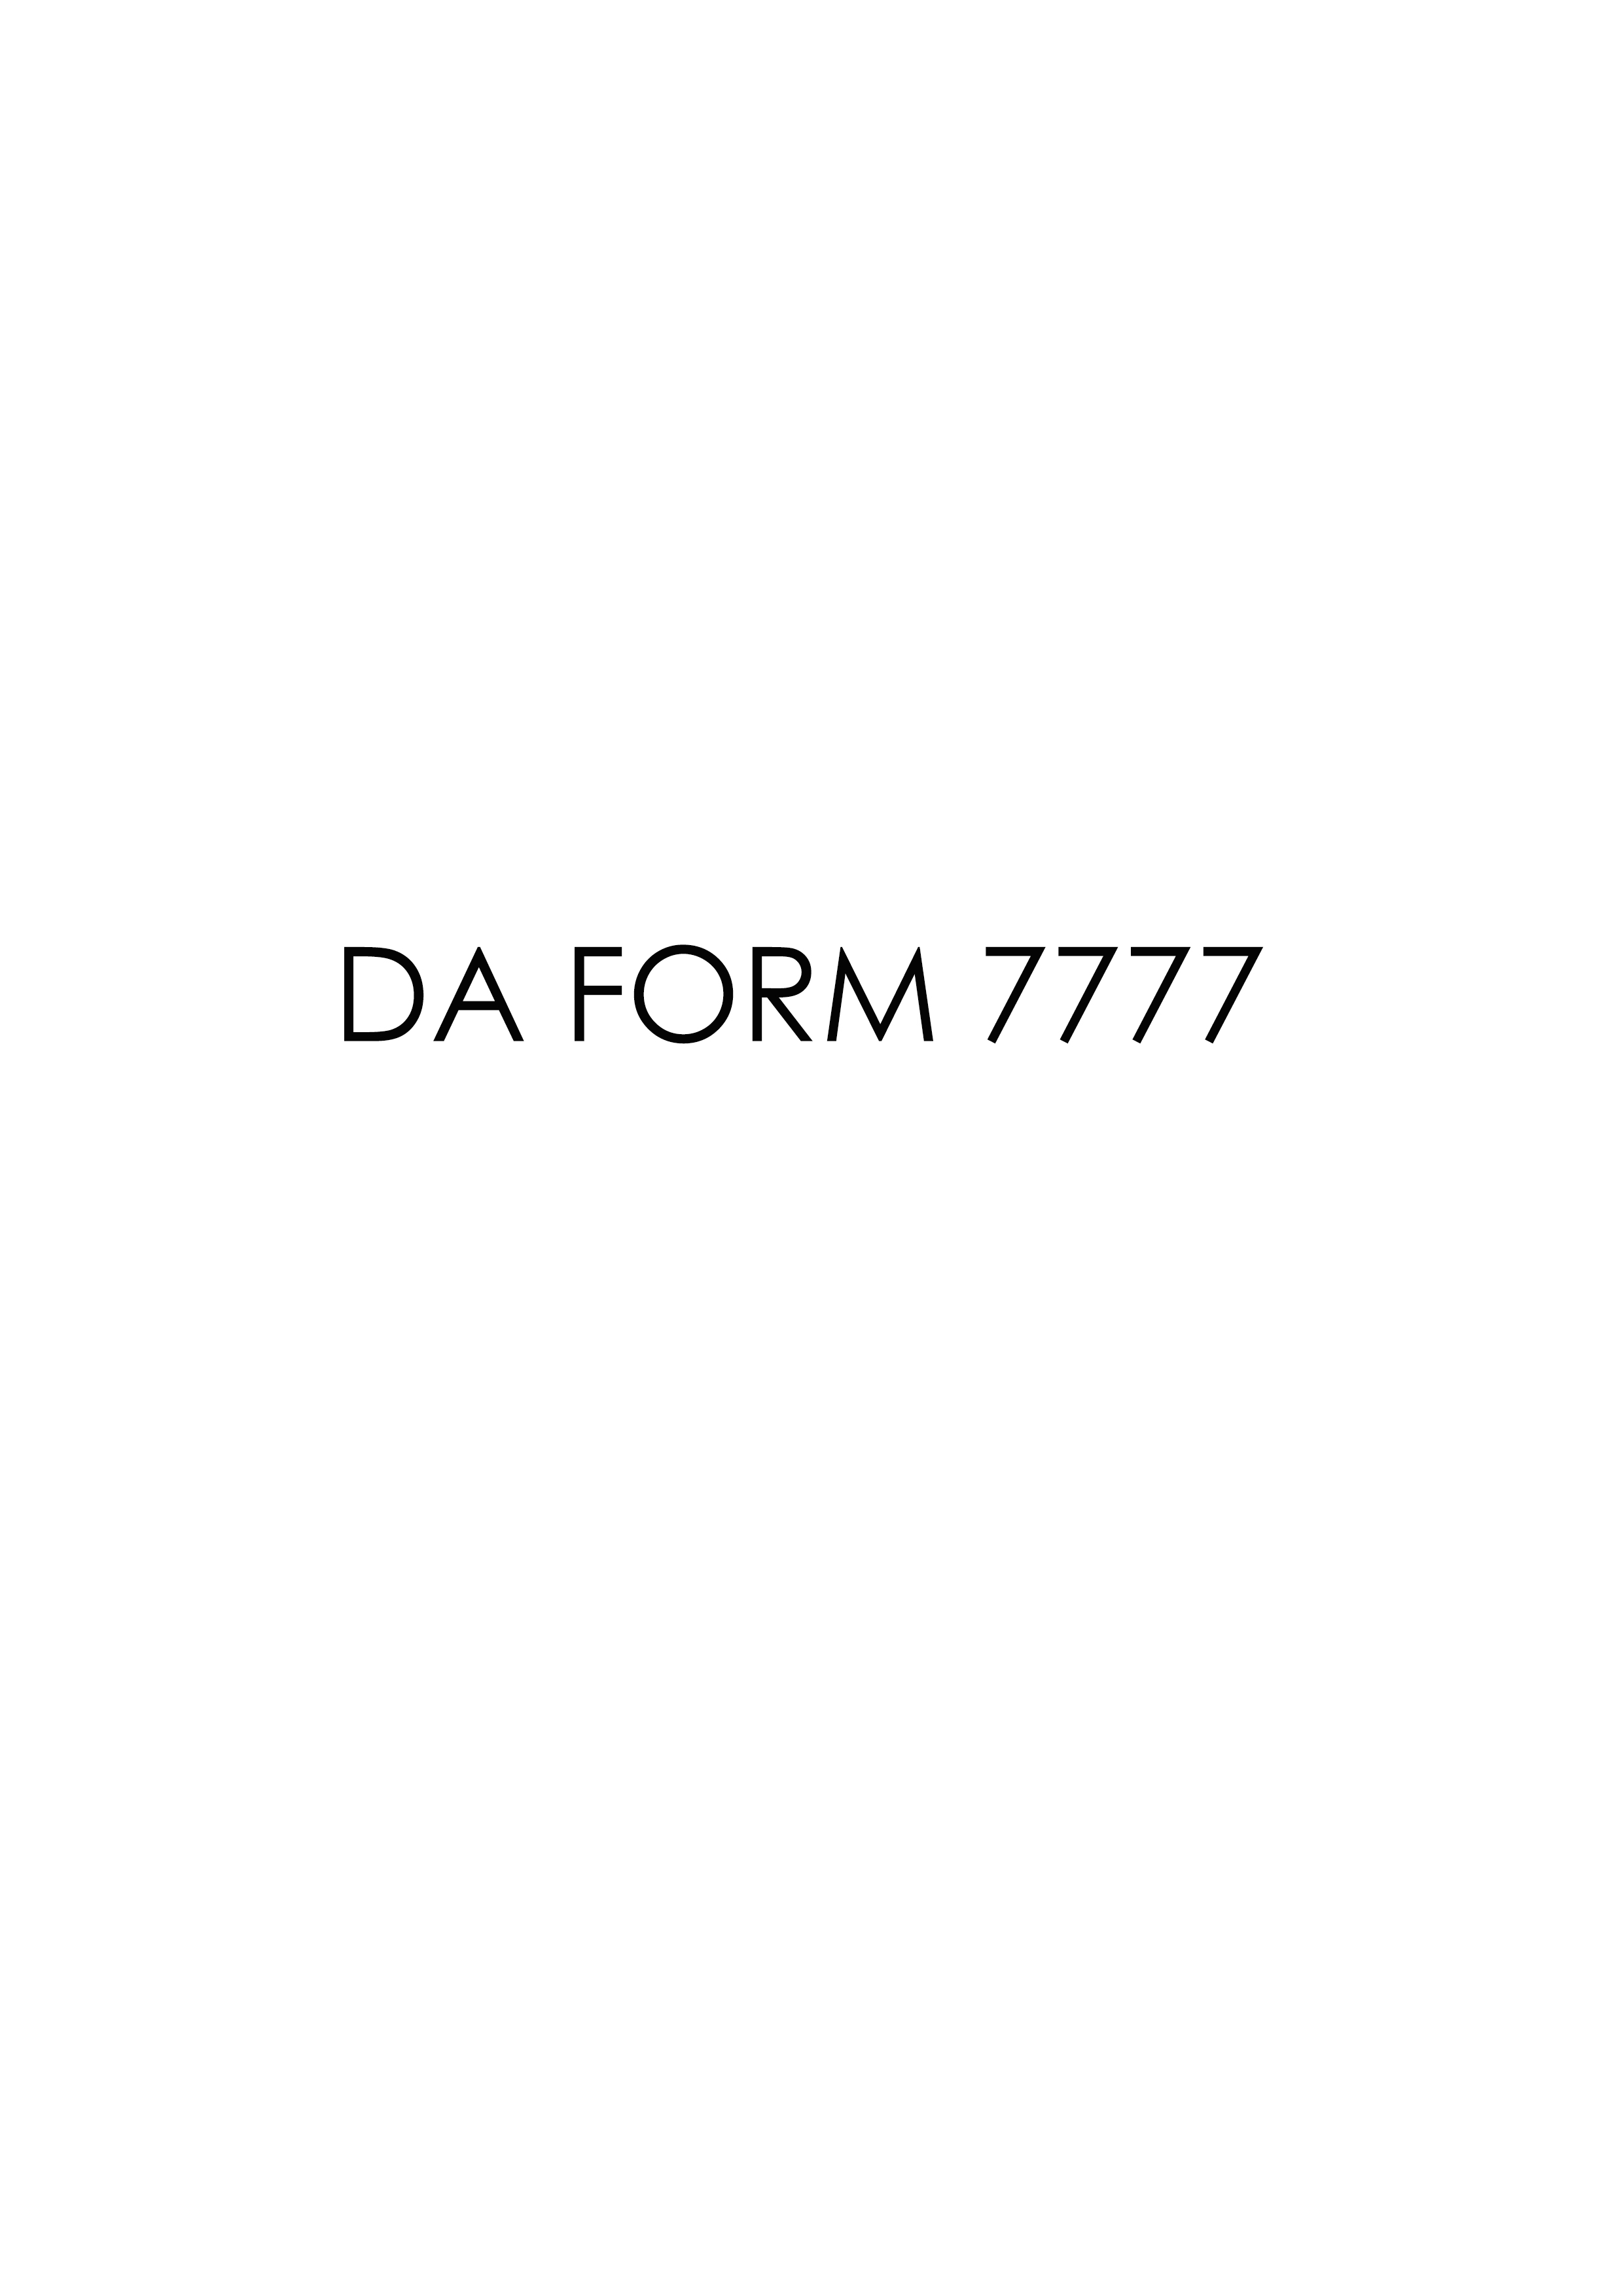 Download da 7777 Form